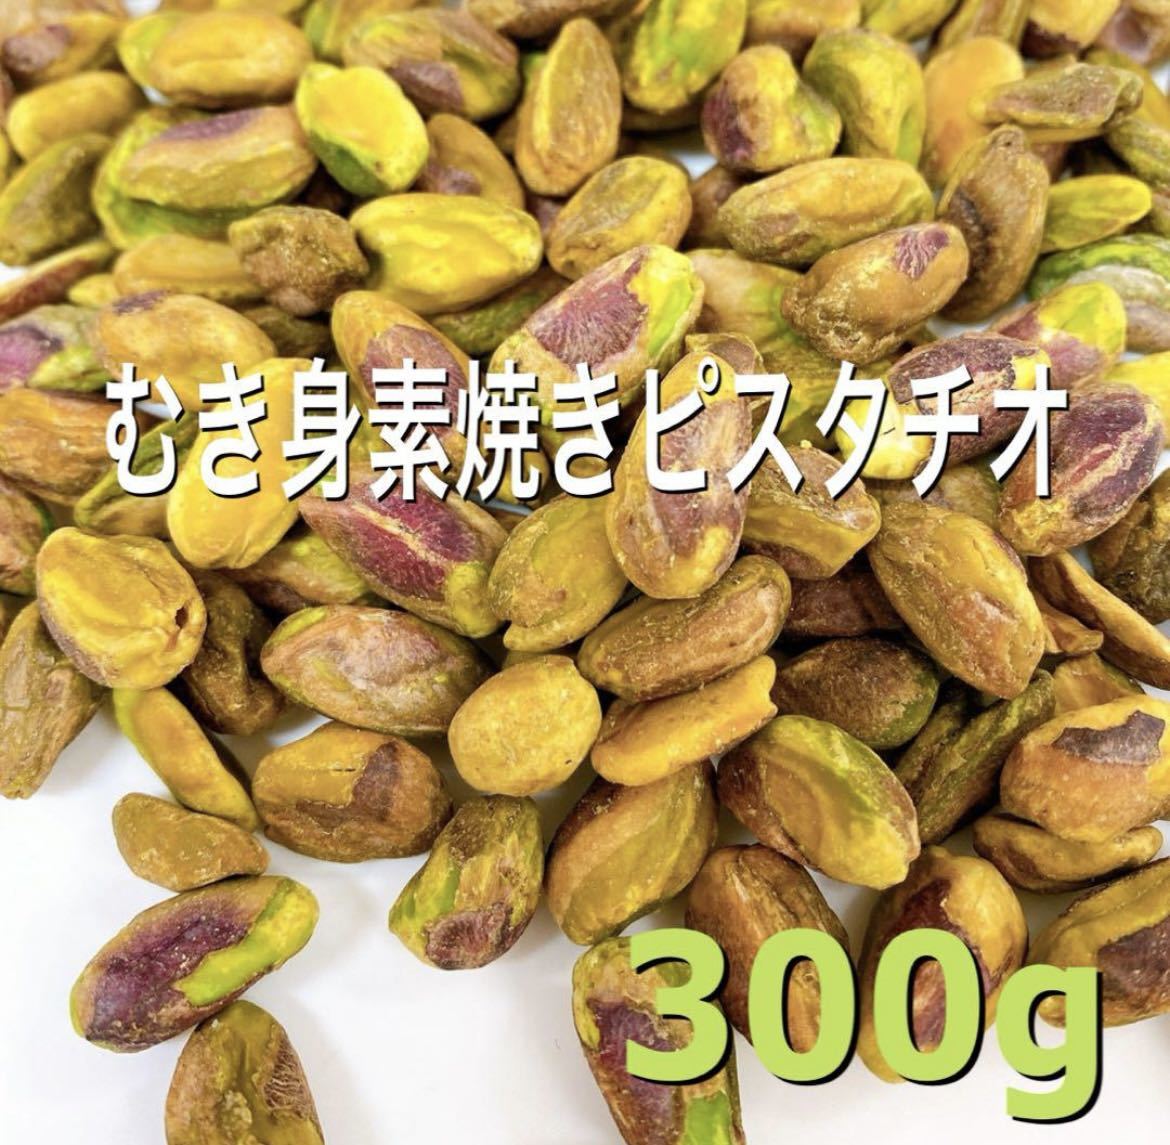 mu.. pistachio 300g inspection / mixed nuts 